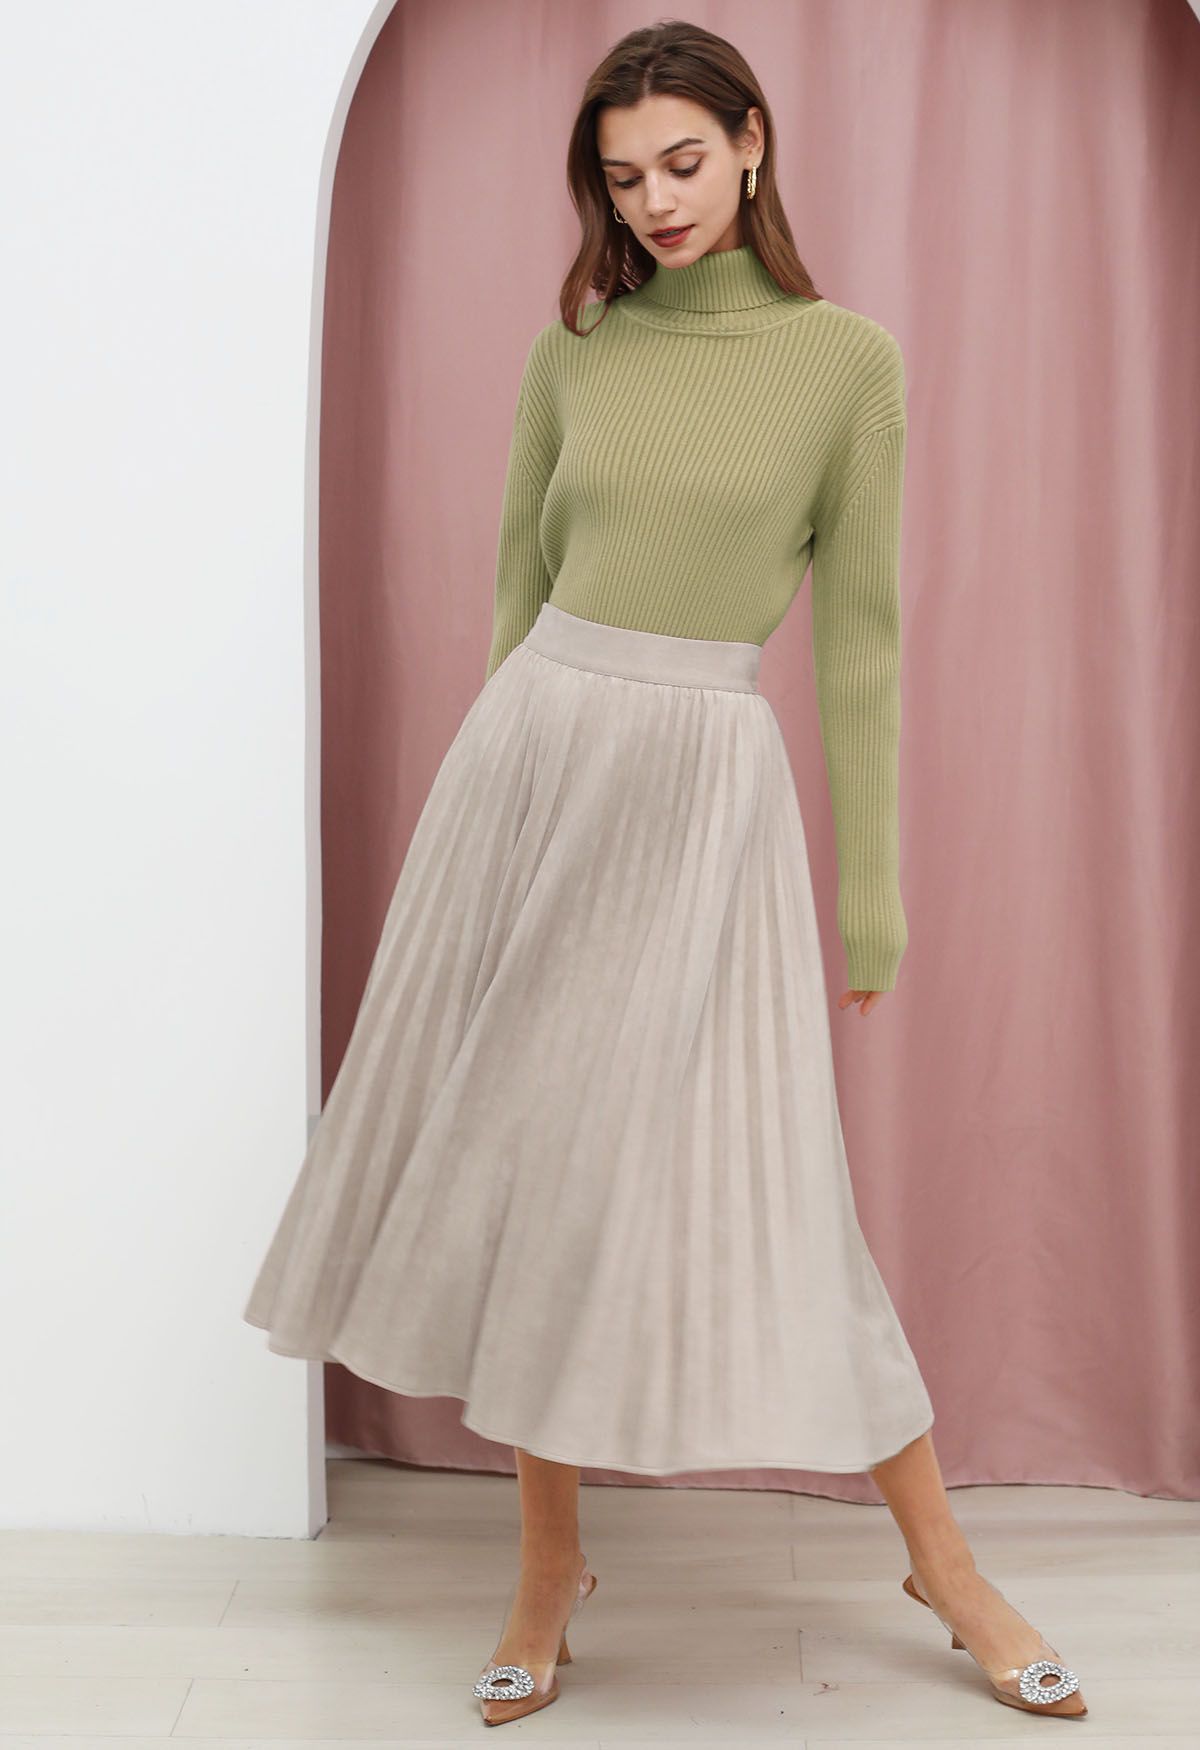 Falda midi plisada con parte delantera lisa sintética marfil